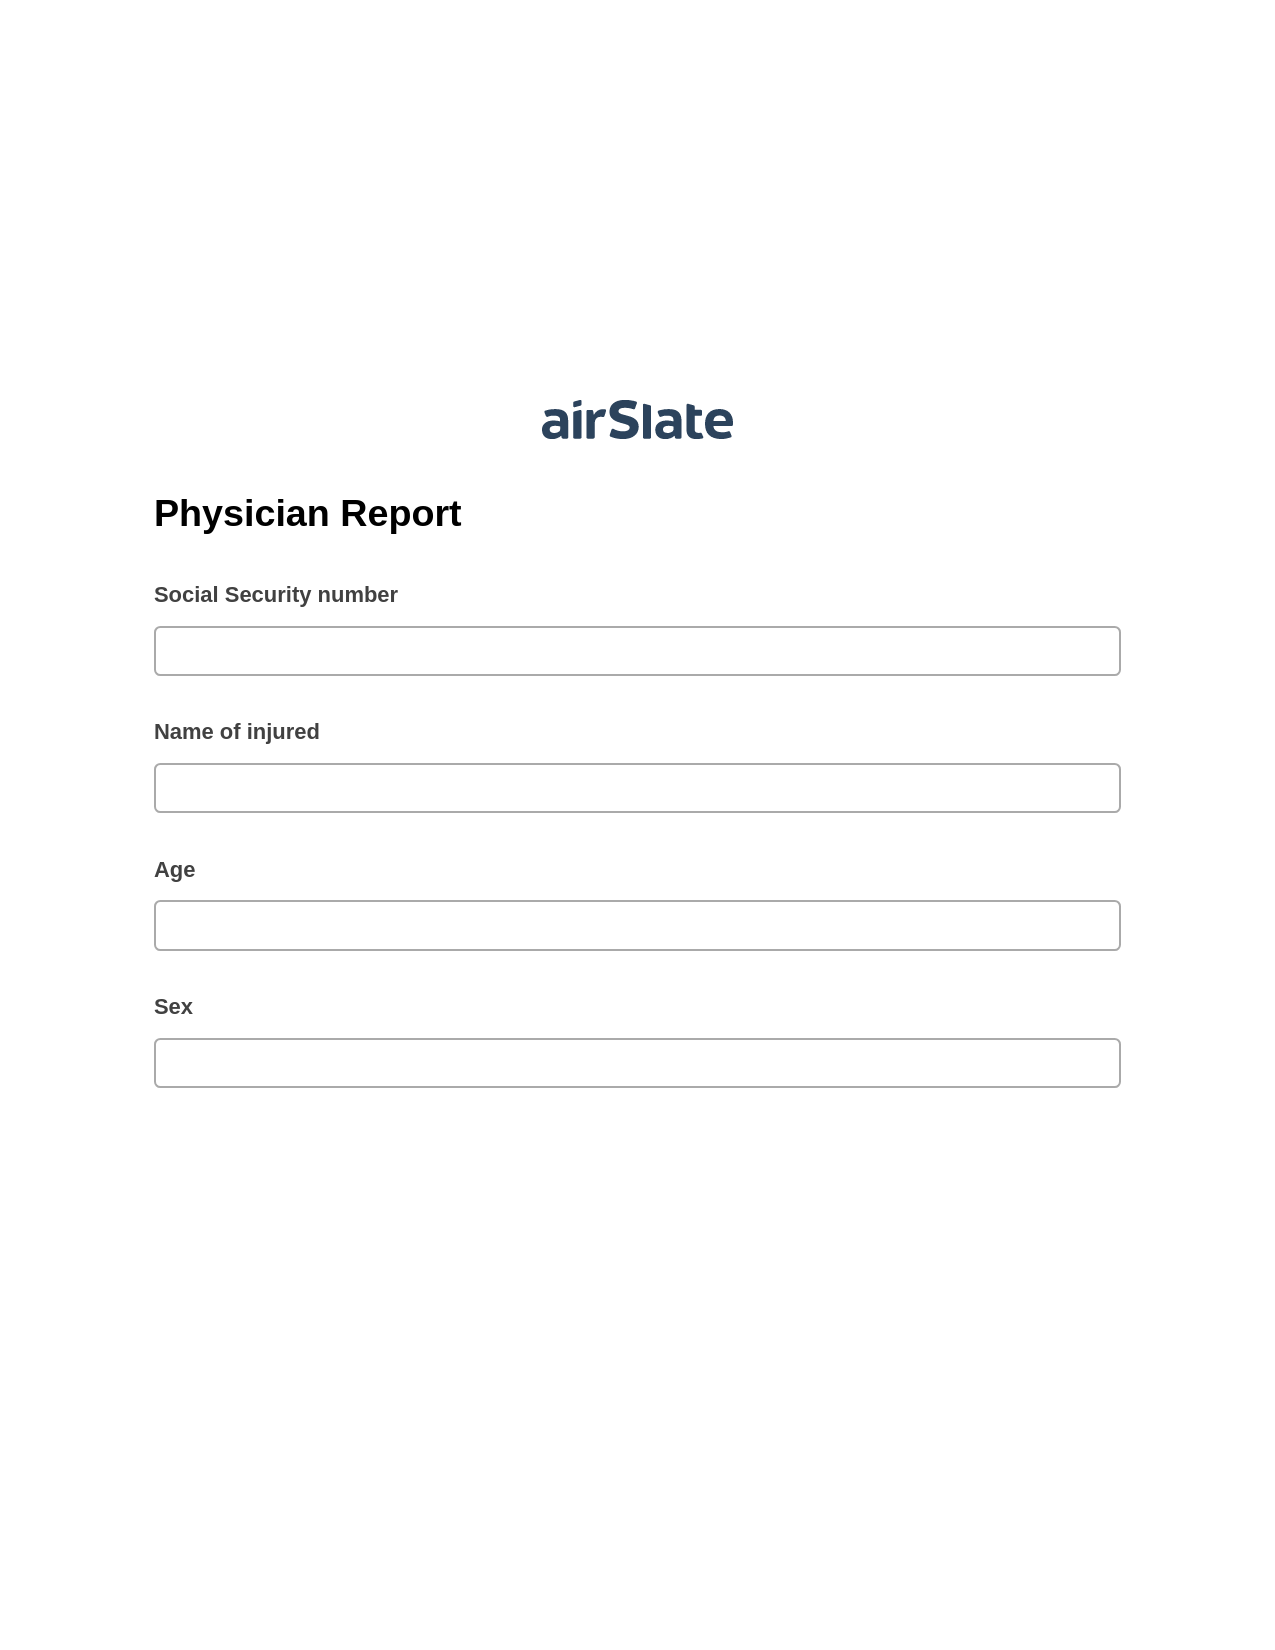 Physician Report Pre-fill Document Bot, Invoke Salesforce Process Bot, Archive to SharePoint Folder Bot